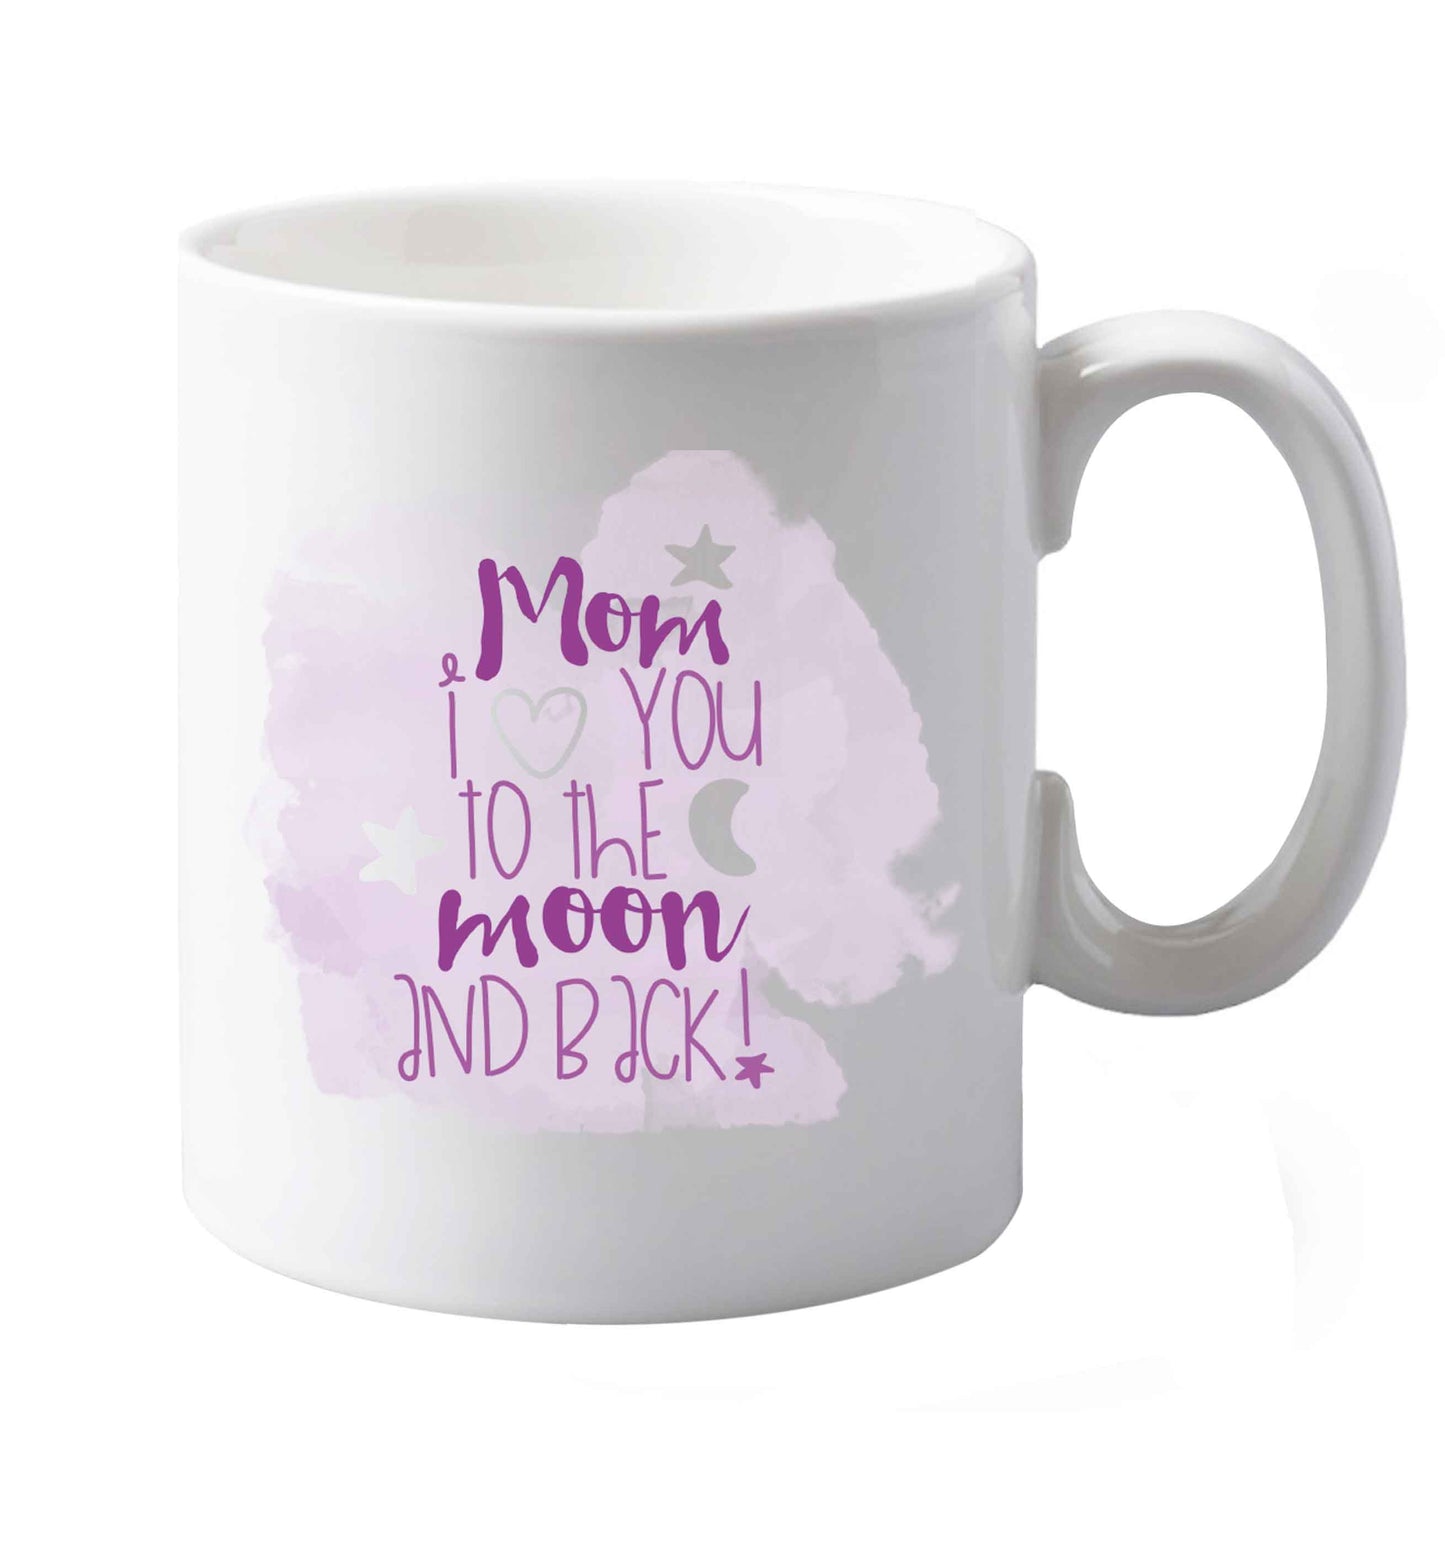 10 oz Mom I love you to the moon and back ceramic mug both sides